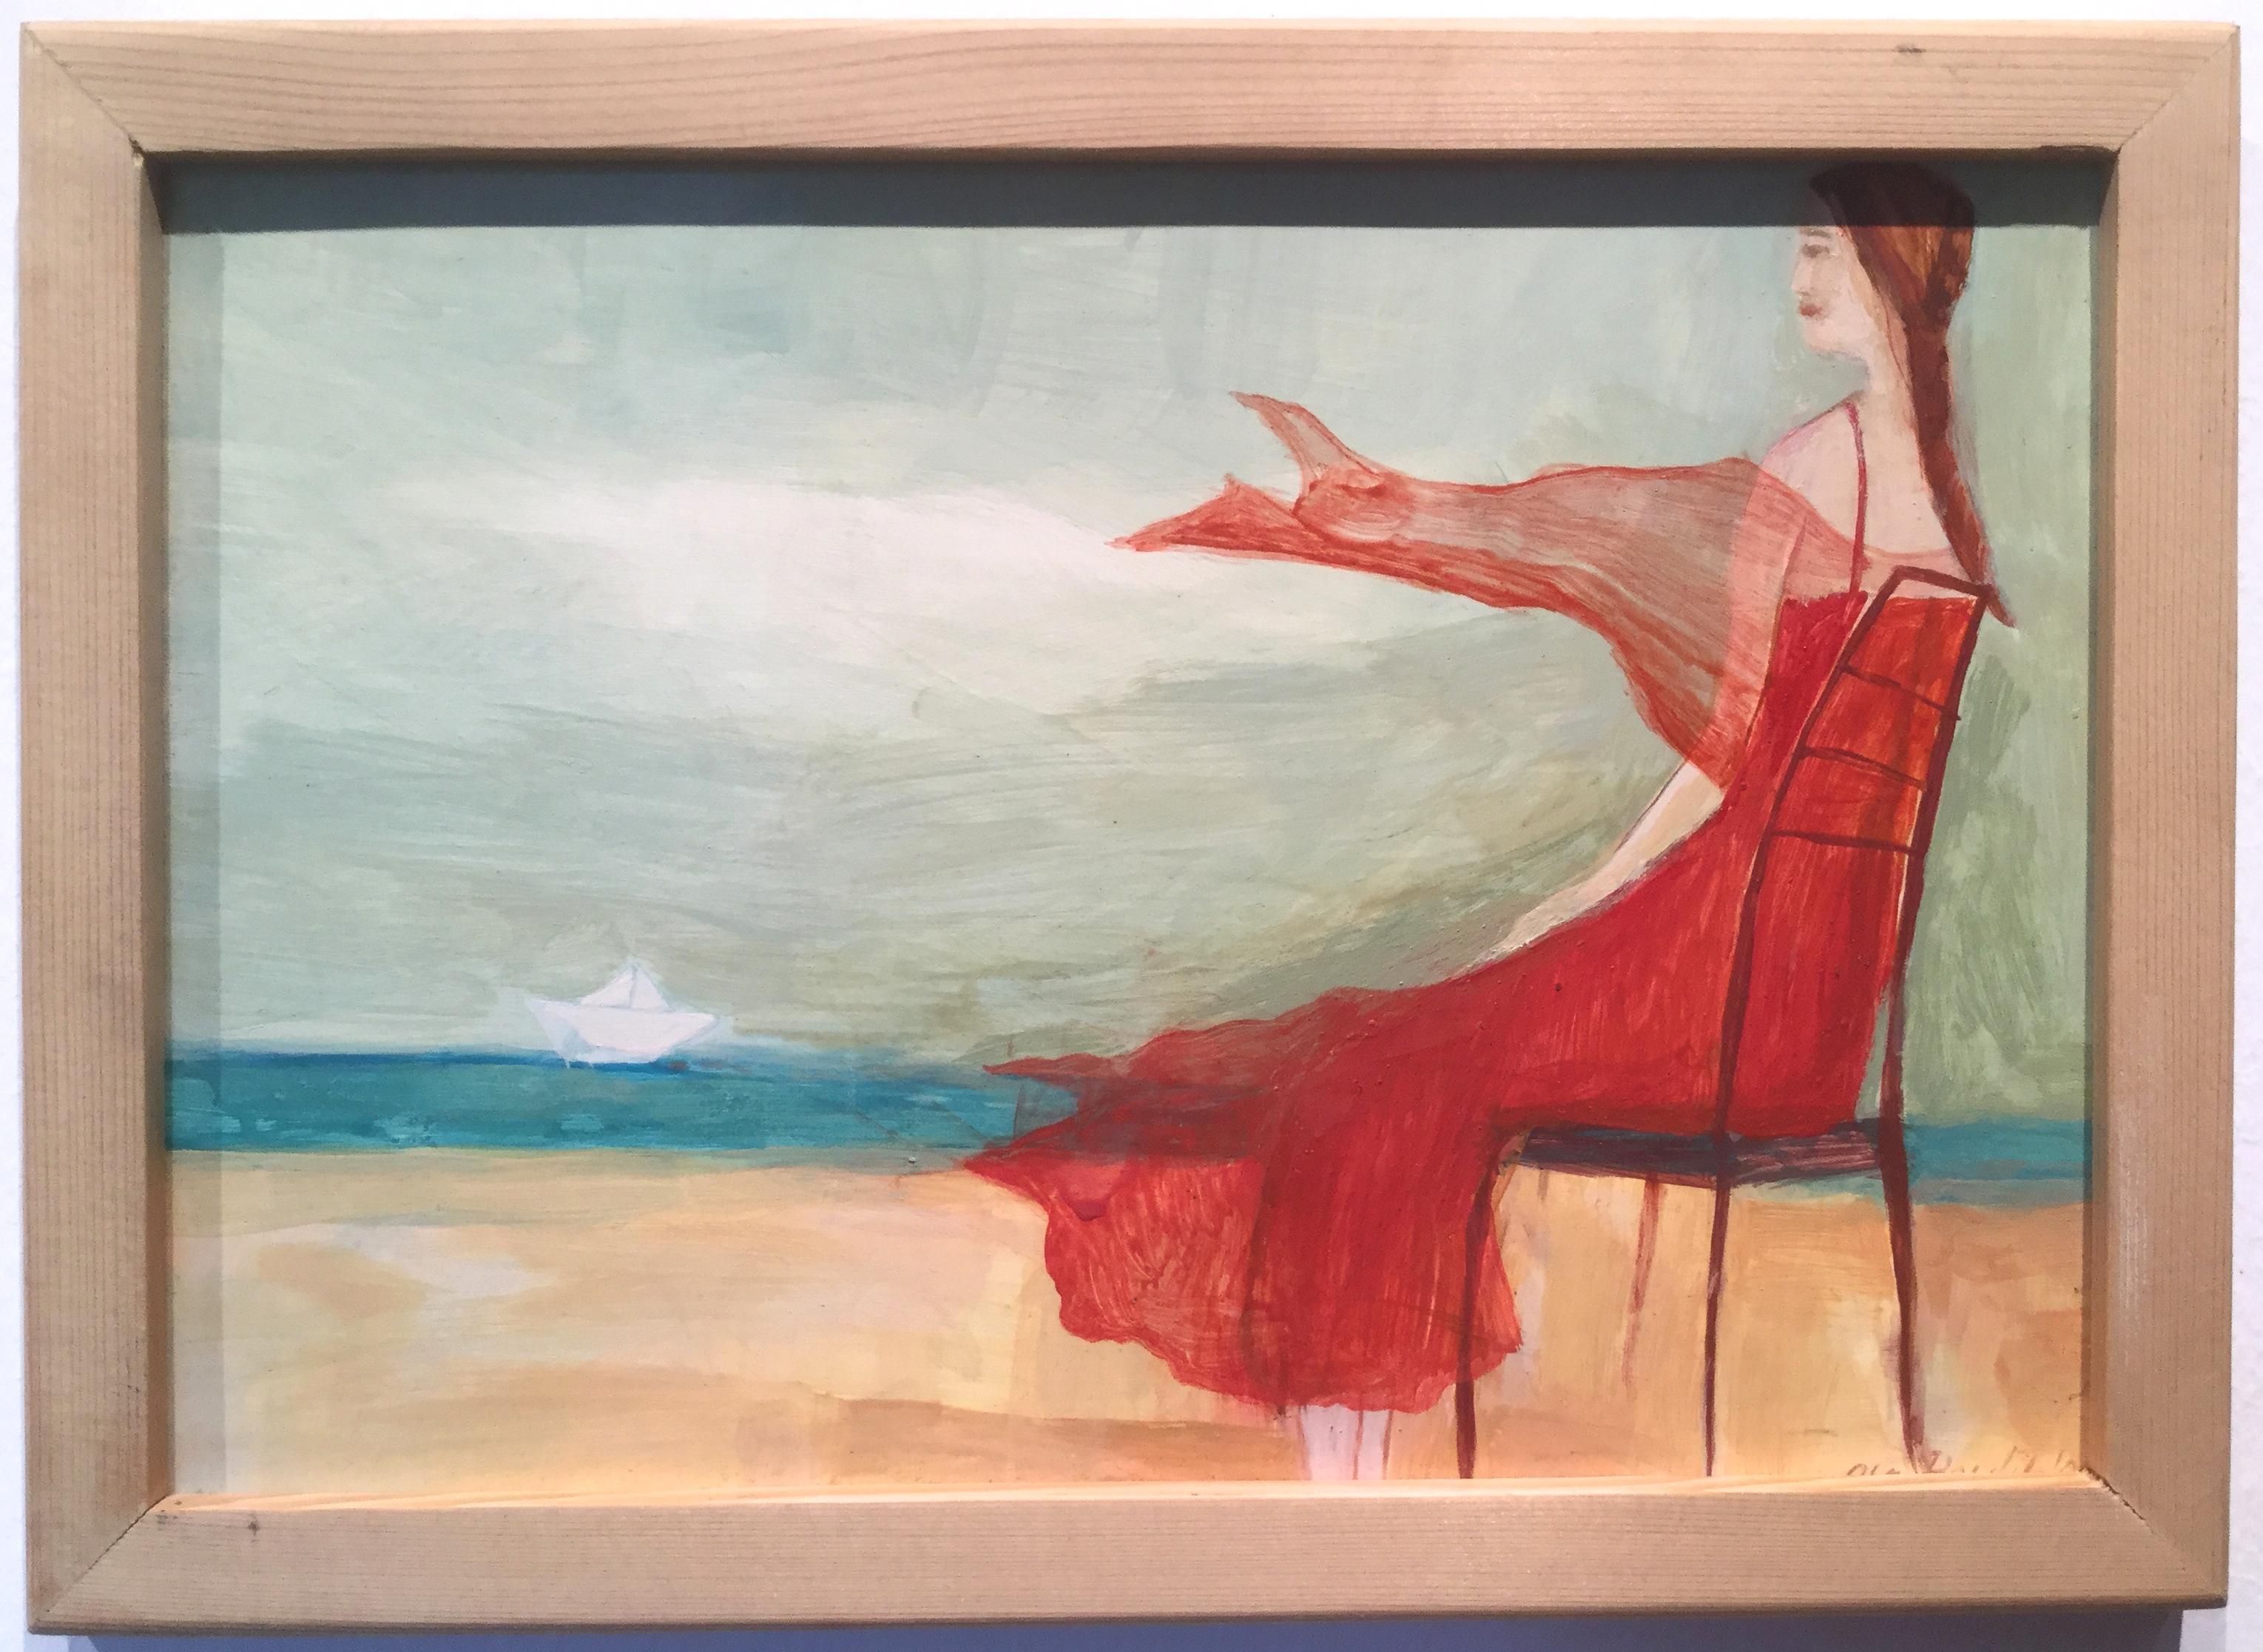 Aleksandra Pawlikowska Figurative Painting - Girl In Red Dress Looks At The Sea - Graceful Illustrative Romantic Painting